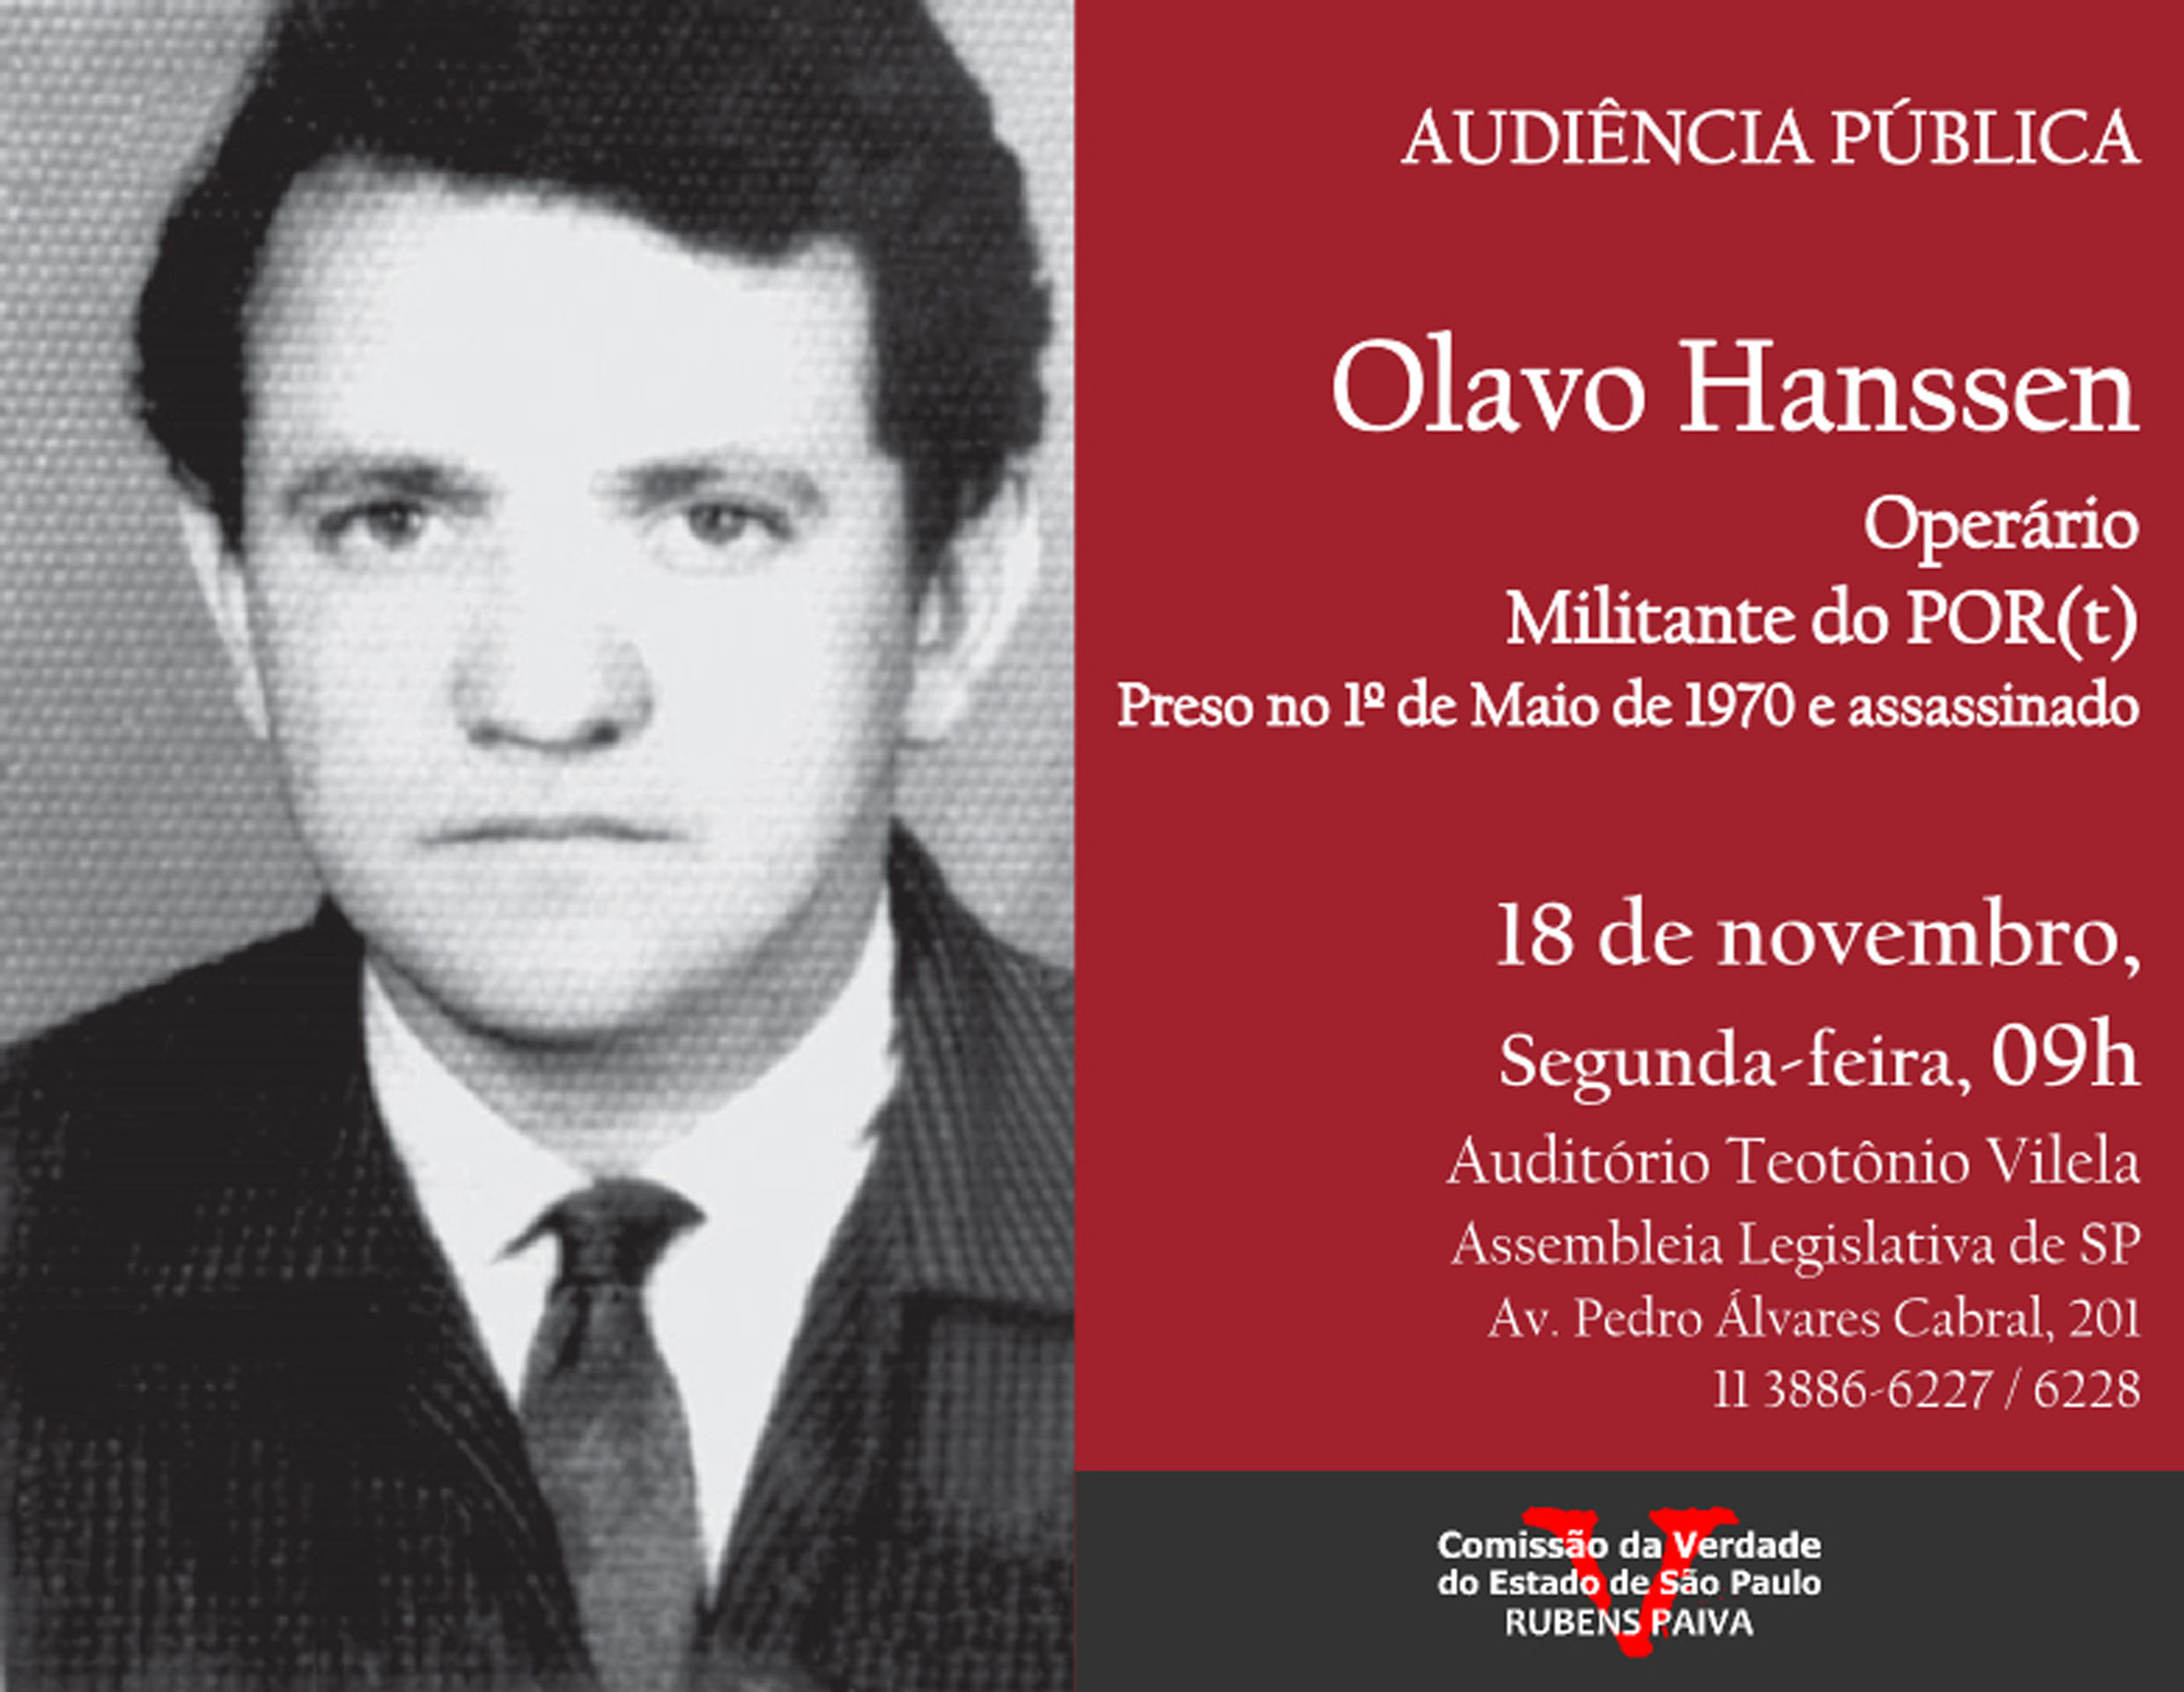 Injeção fatal: Olavo Hansen (14/12/1937 – 9/5/1970), “Dos Filhos deste Solo”, Nilmário Miranda e Carlos Tibúrcio.